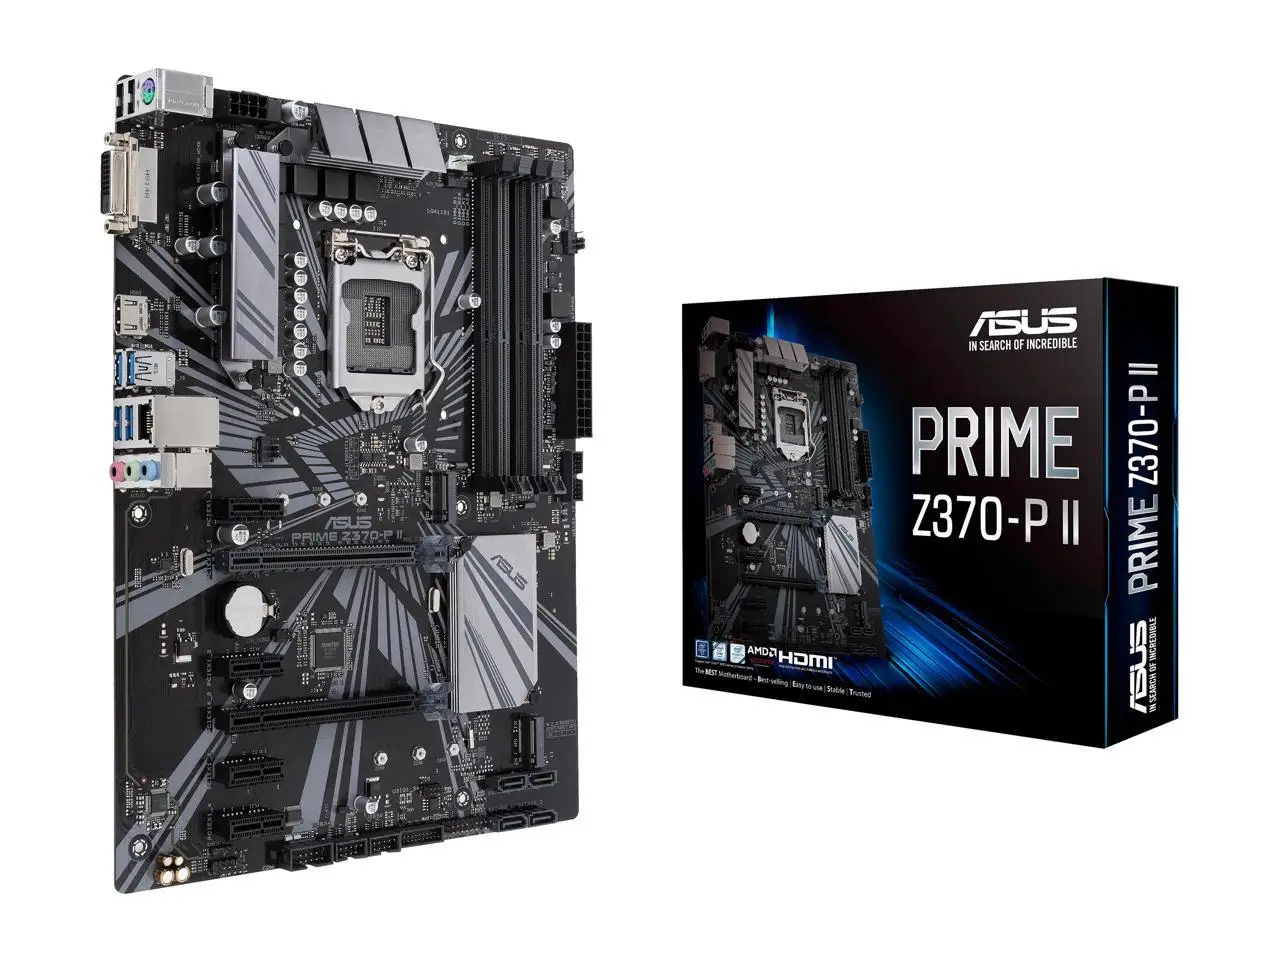 

ASUS PRIME Z370-P II LGA 1151 (300 Series) Intel Z370 HDMI SATA 6Gb/s USB 3.1 ATX Intel Motherboard